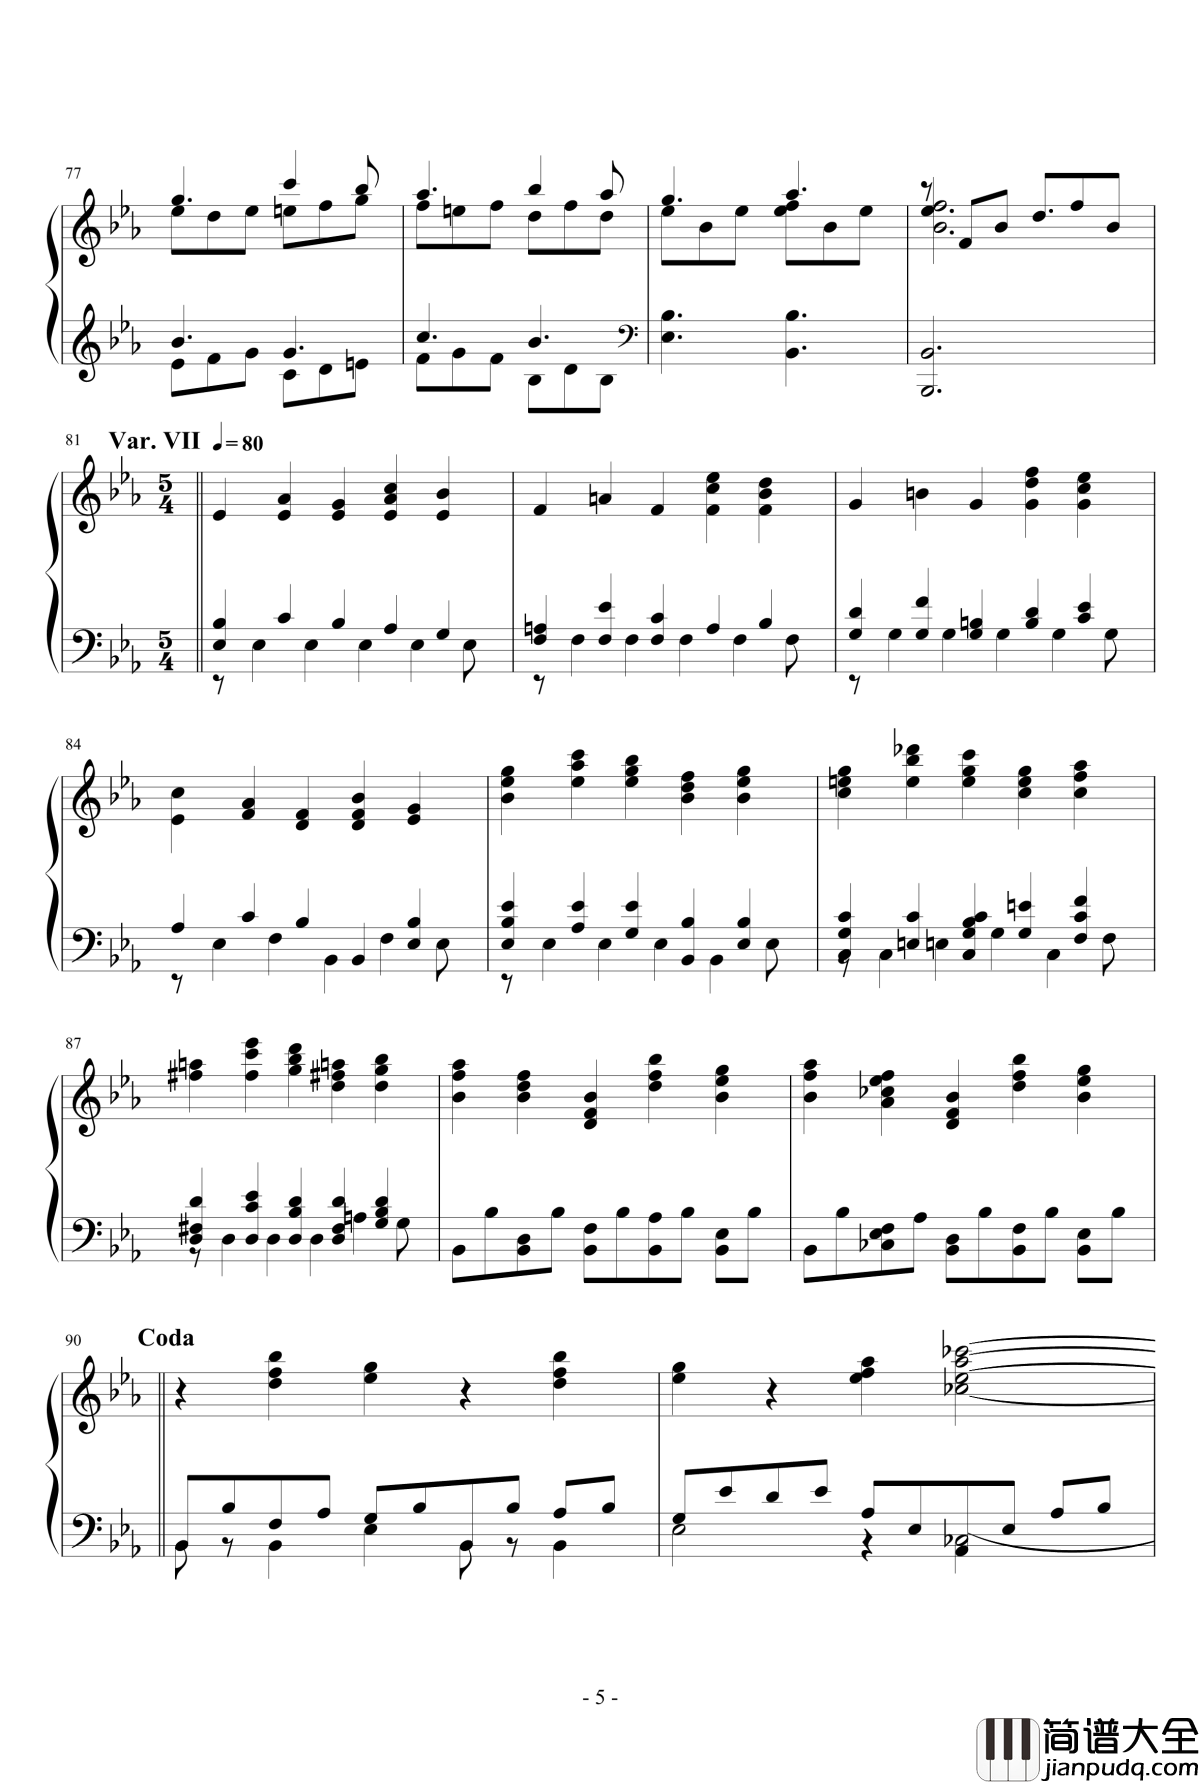 Salute_to_Elgar钢琴谱_nzh1934